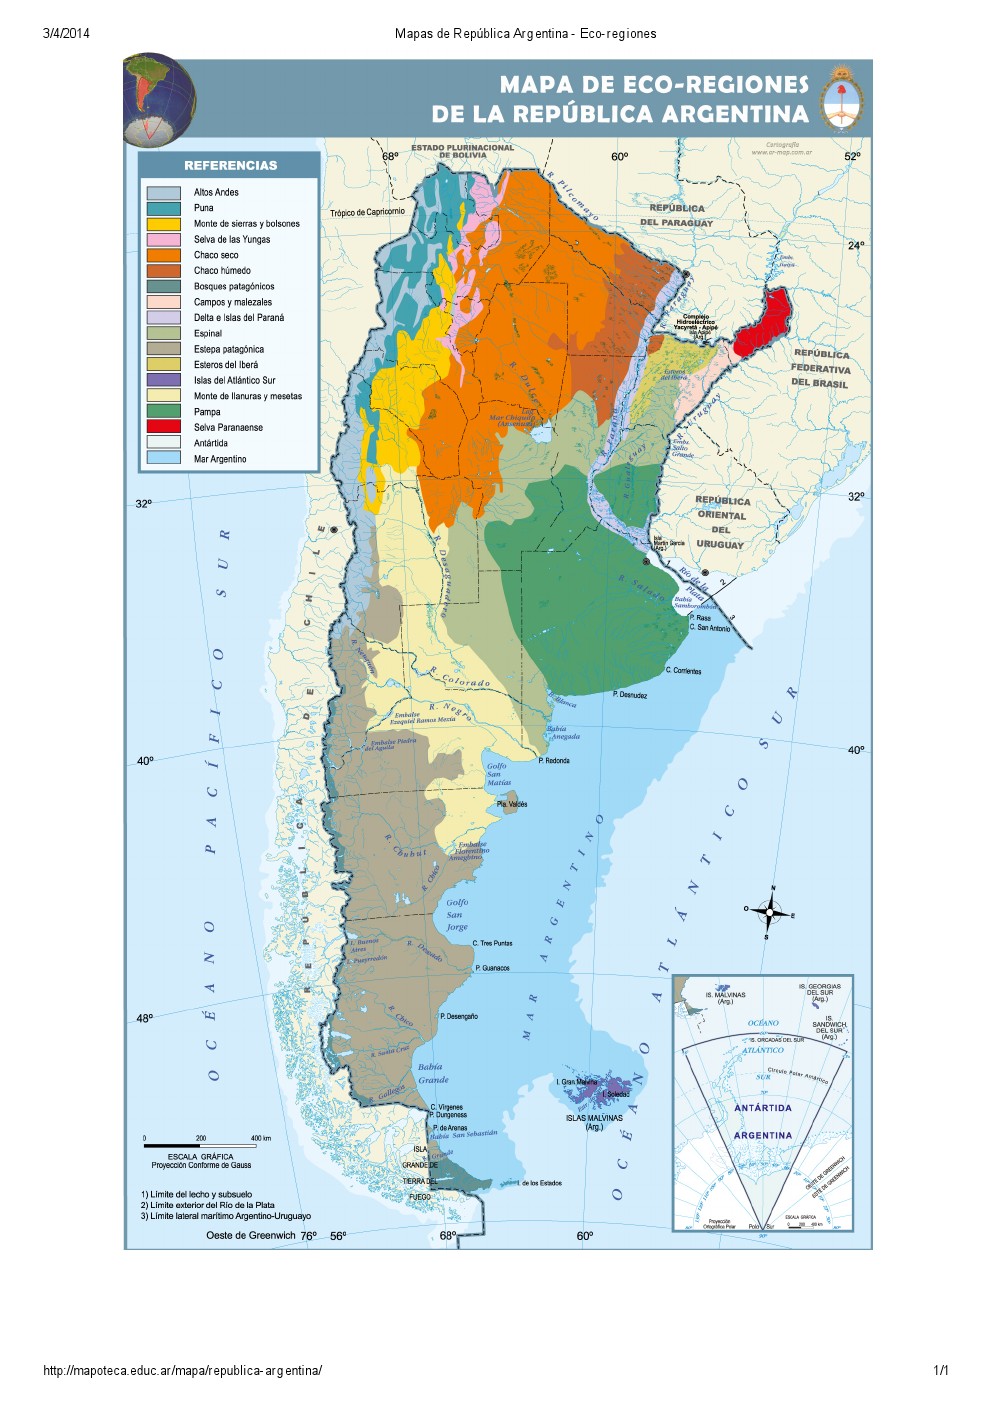 Mapa eco-regiones de Argentina. Mapoteca de Educ.ar